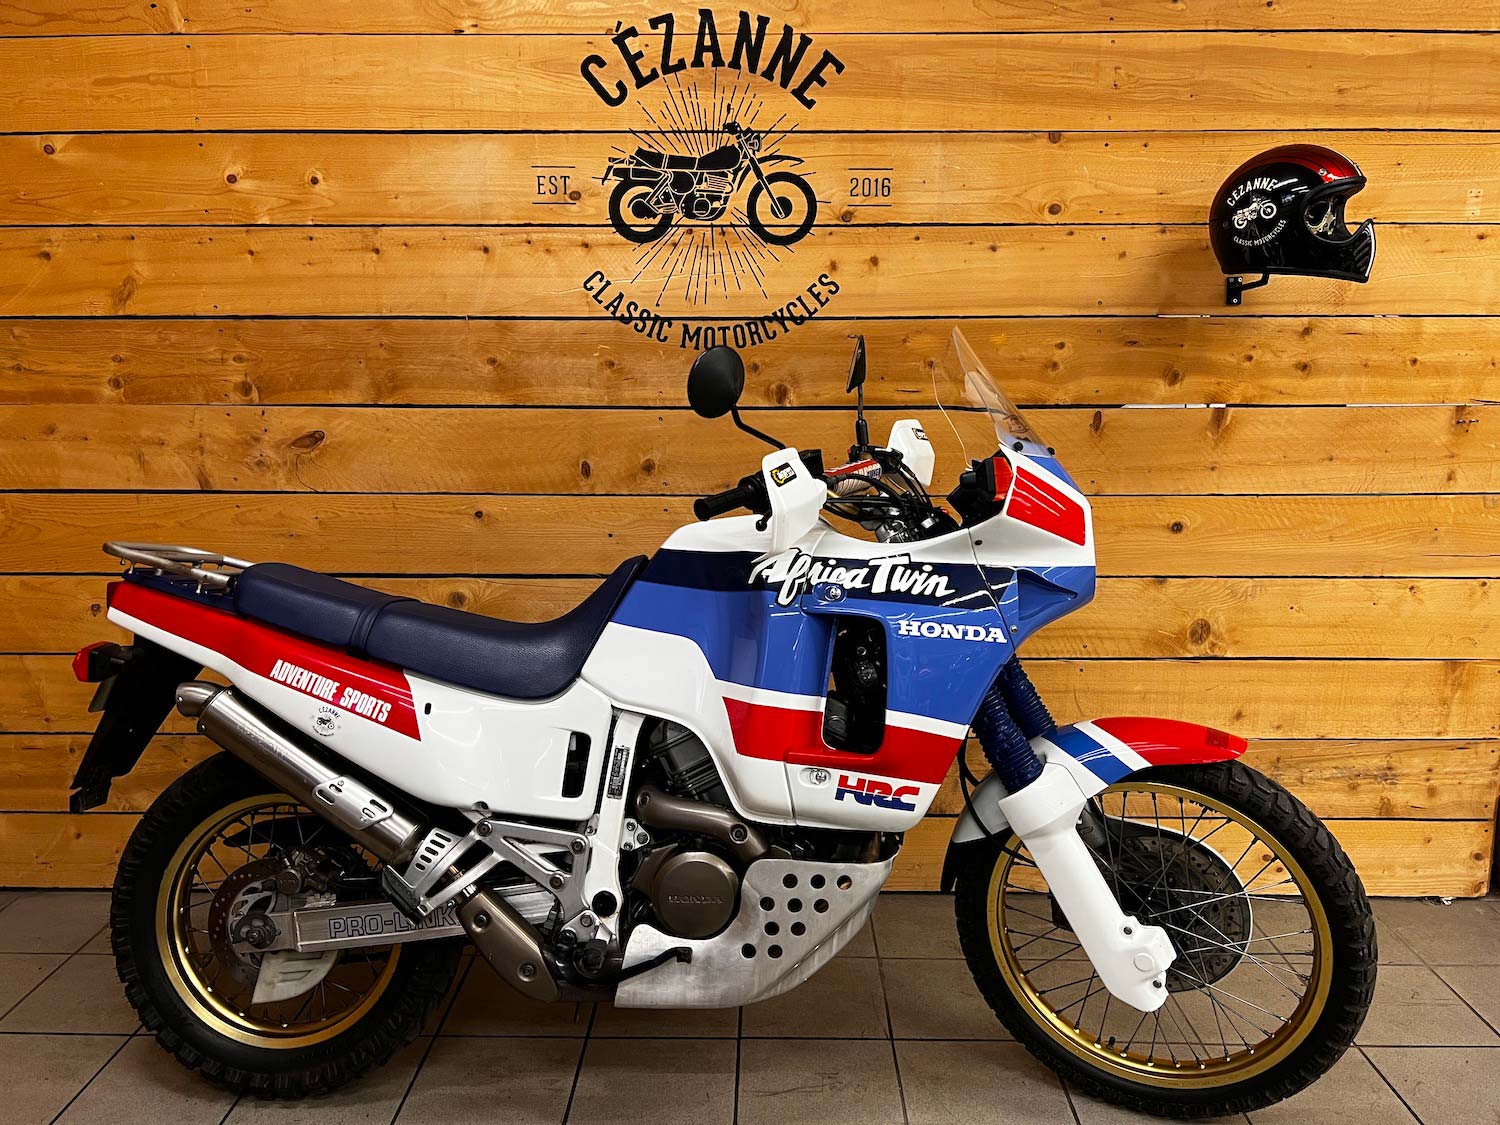 Honda_Africa_Twin_Cezanne_classic_motorcycle_13-153.jpg